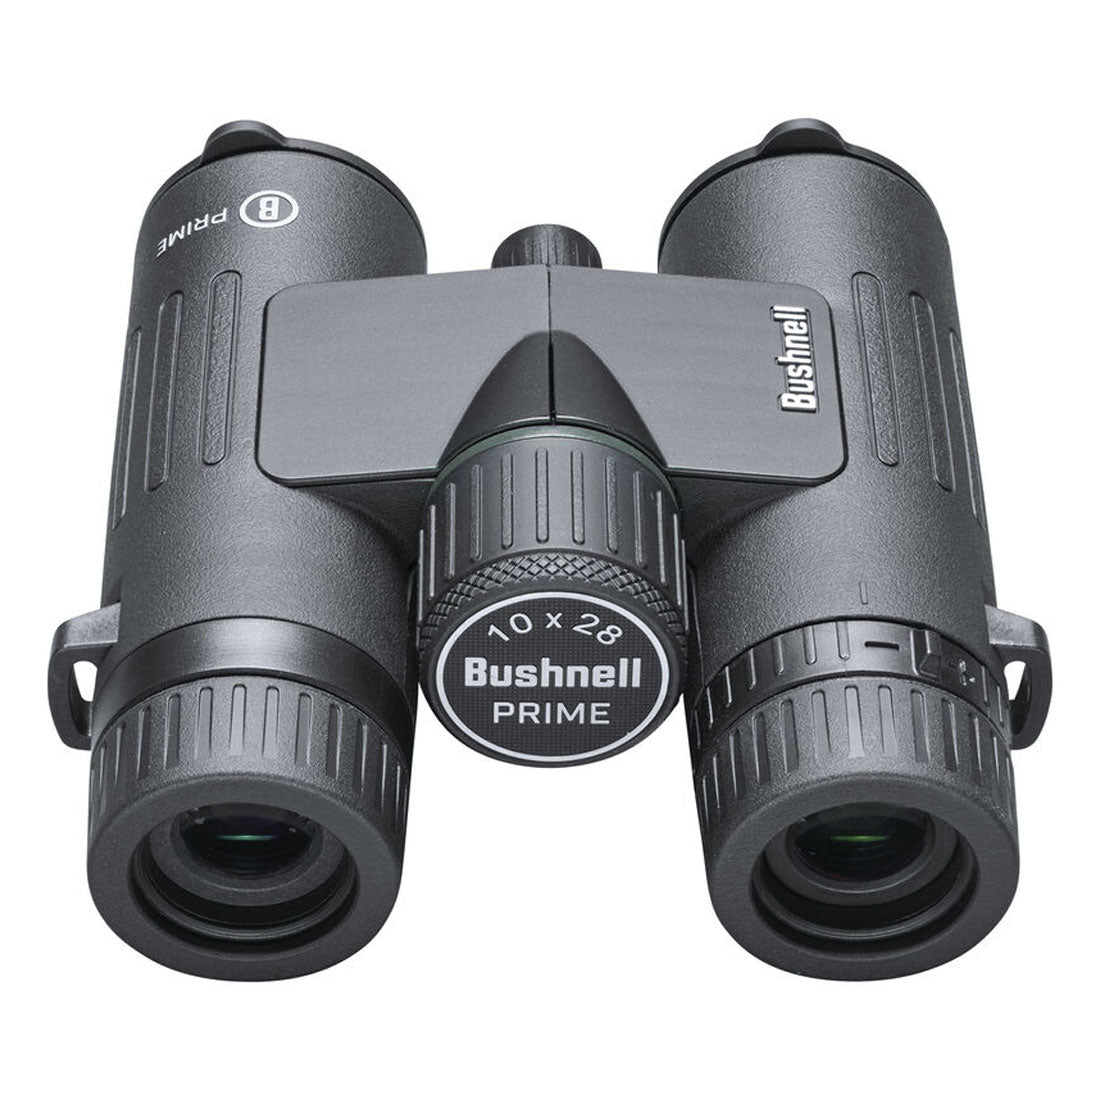 Bushnell BPR1028 Prime 10x28 Binoculars